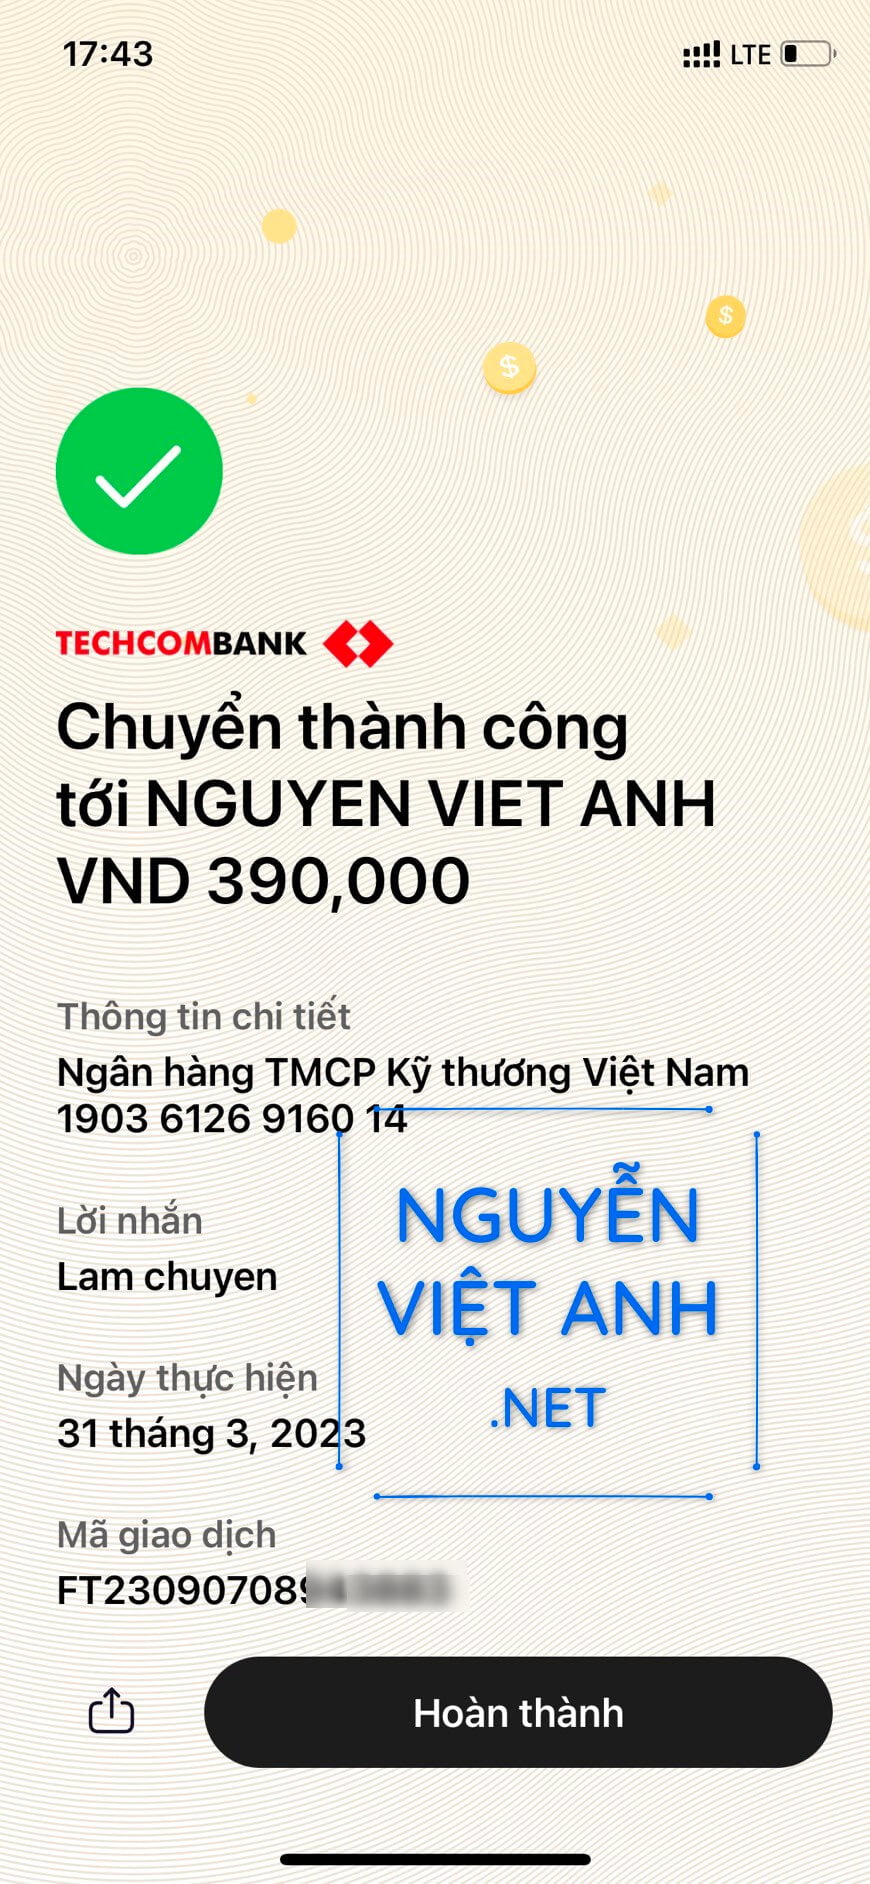 NguyenVietAnh.Net